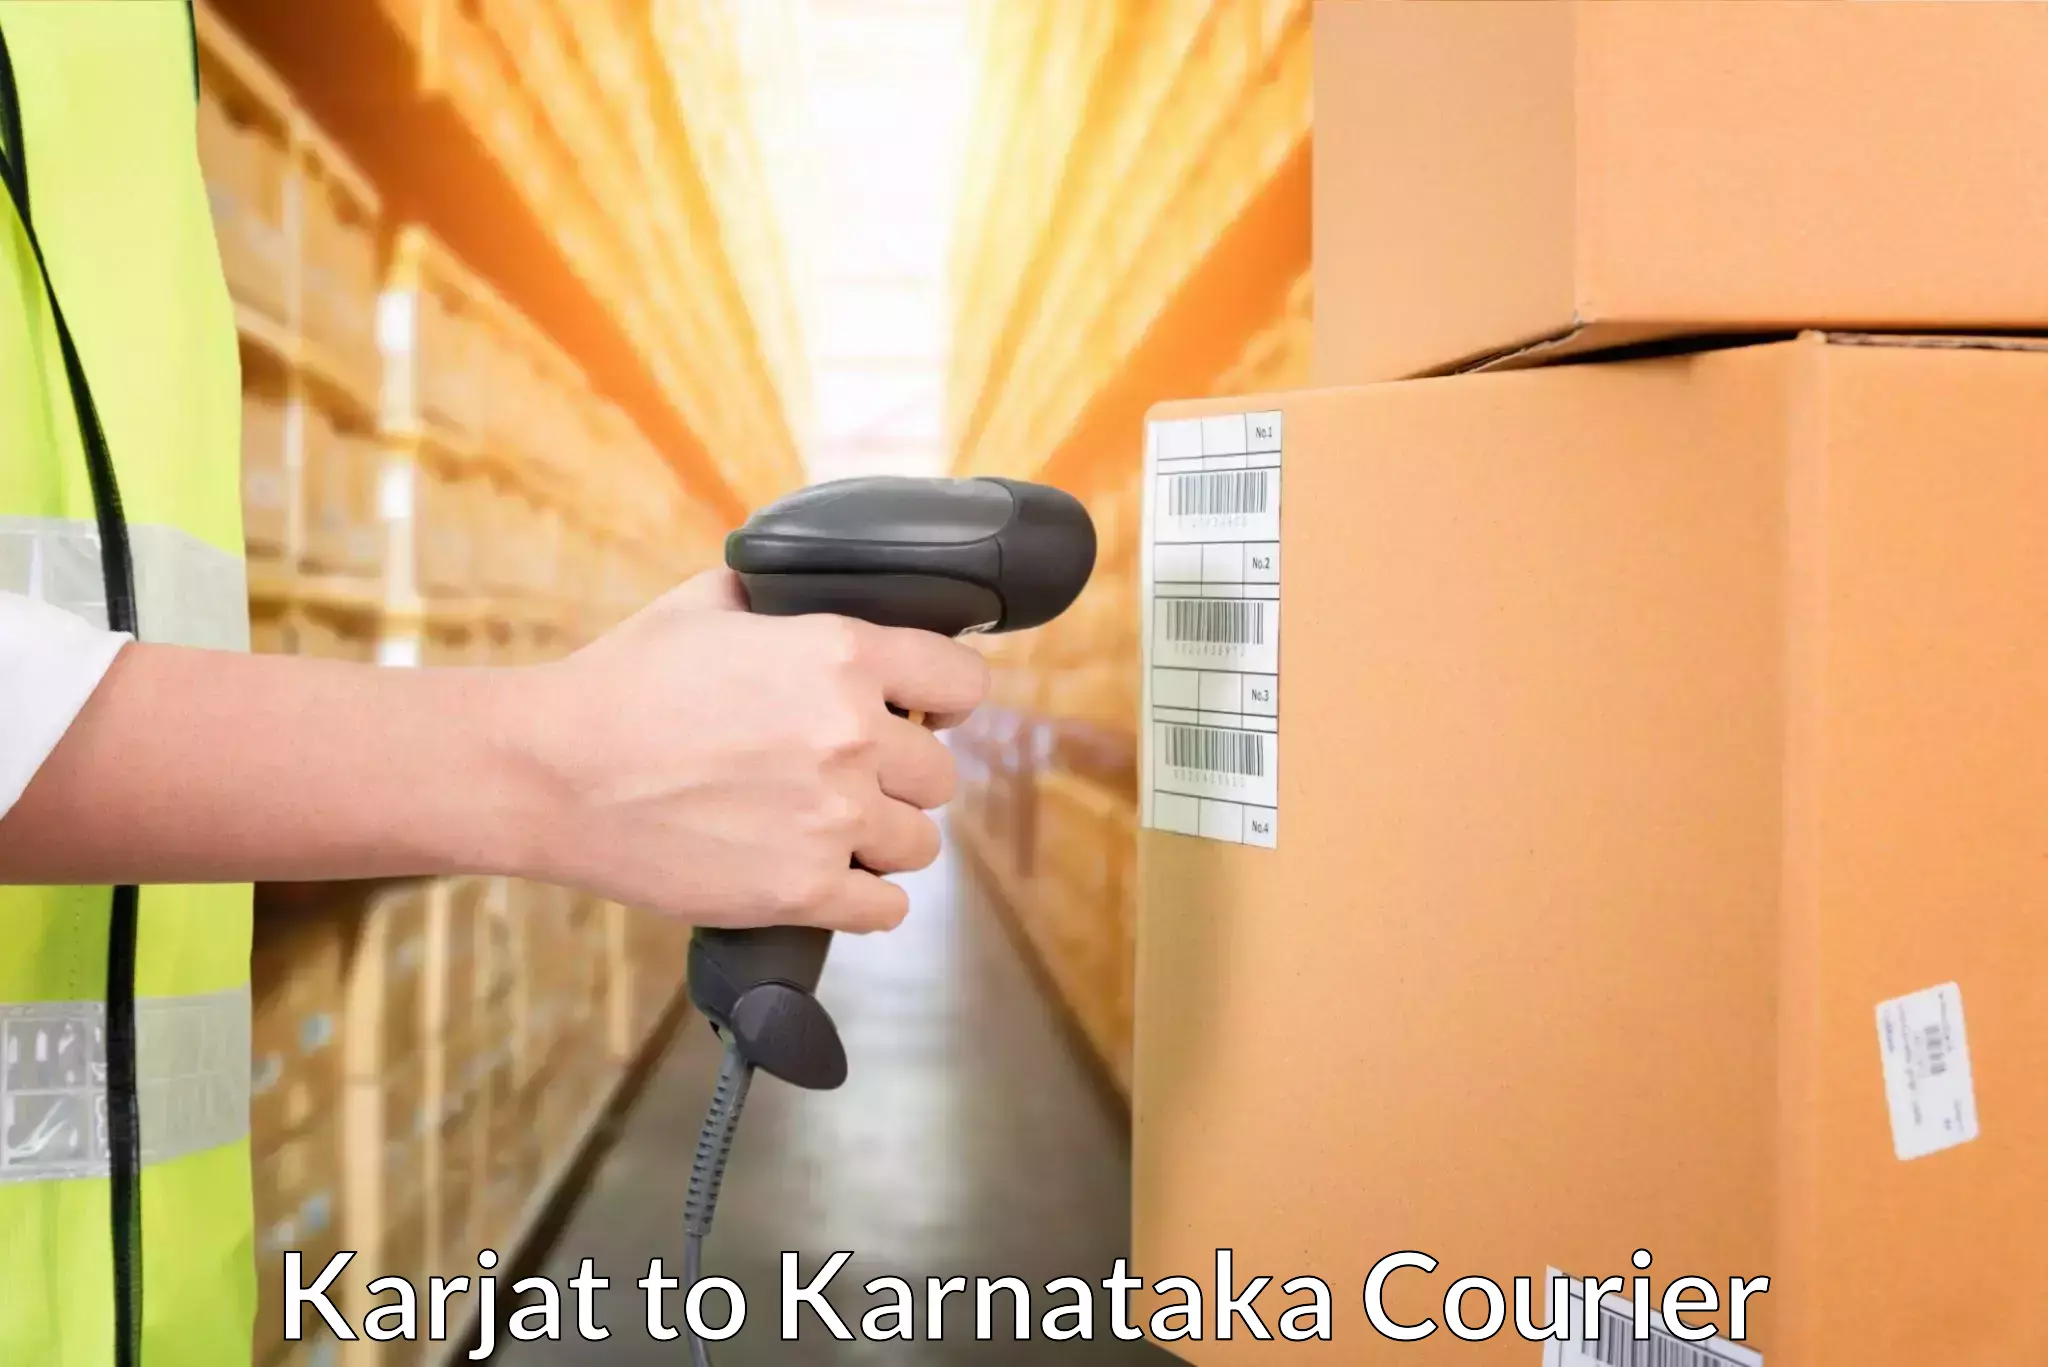 Overnight delivery services Karjat to Karnataka